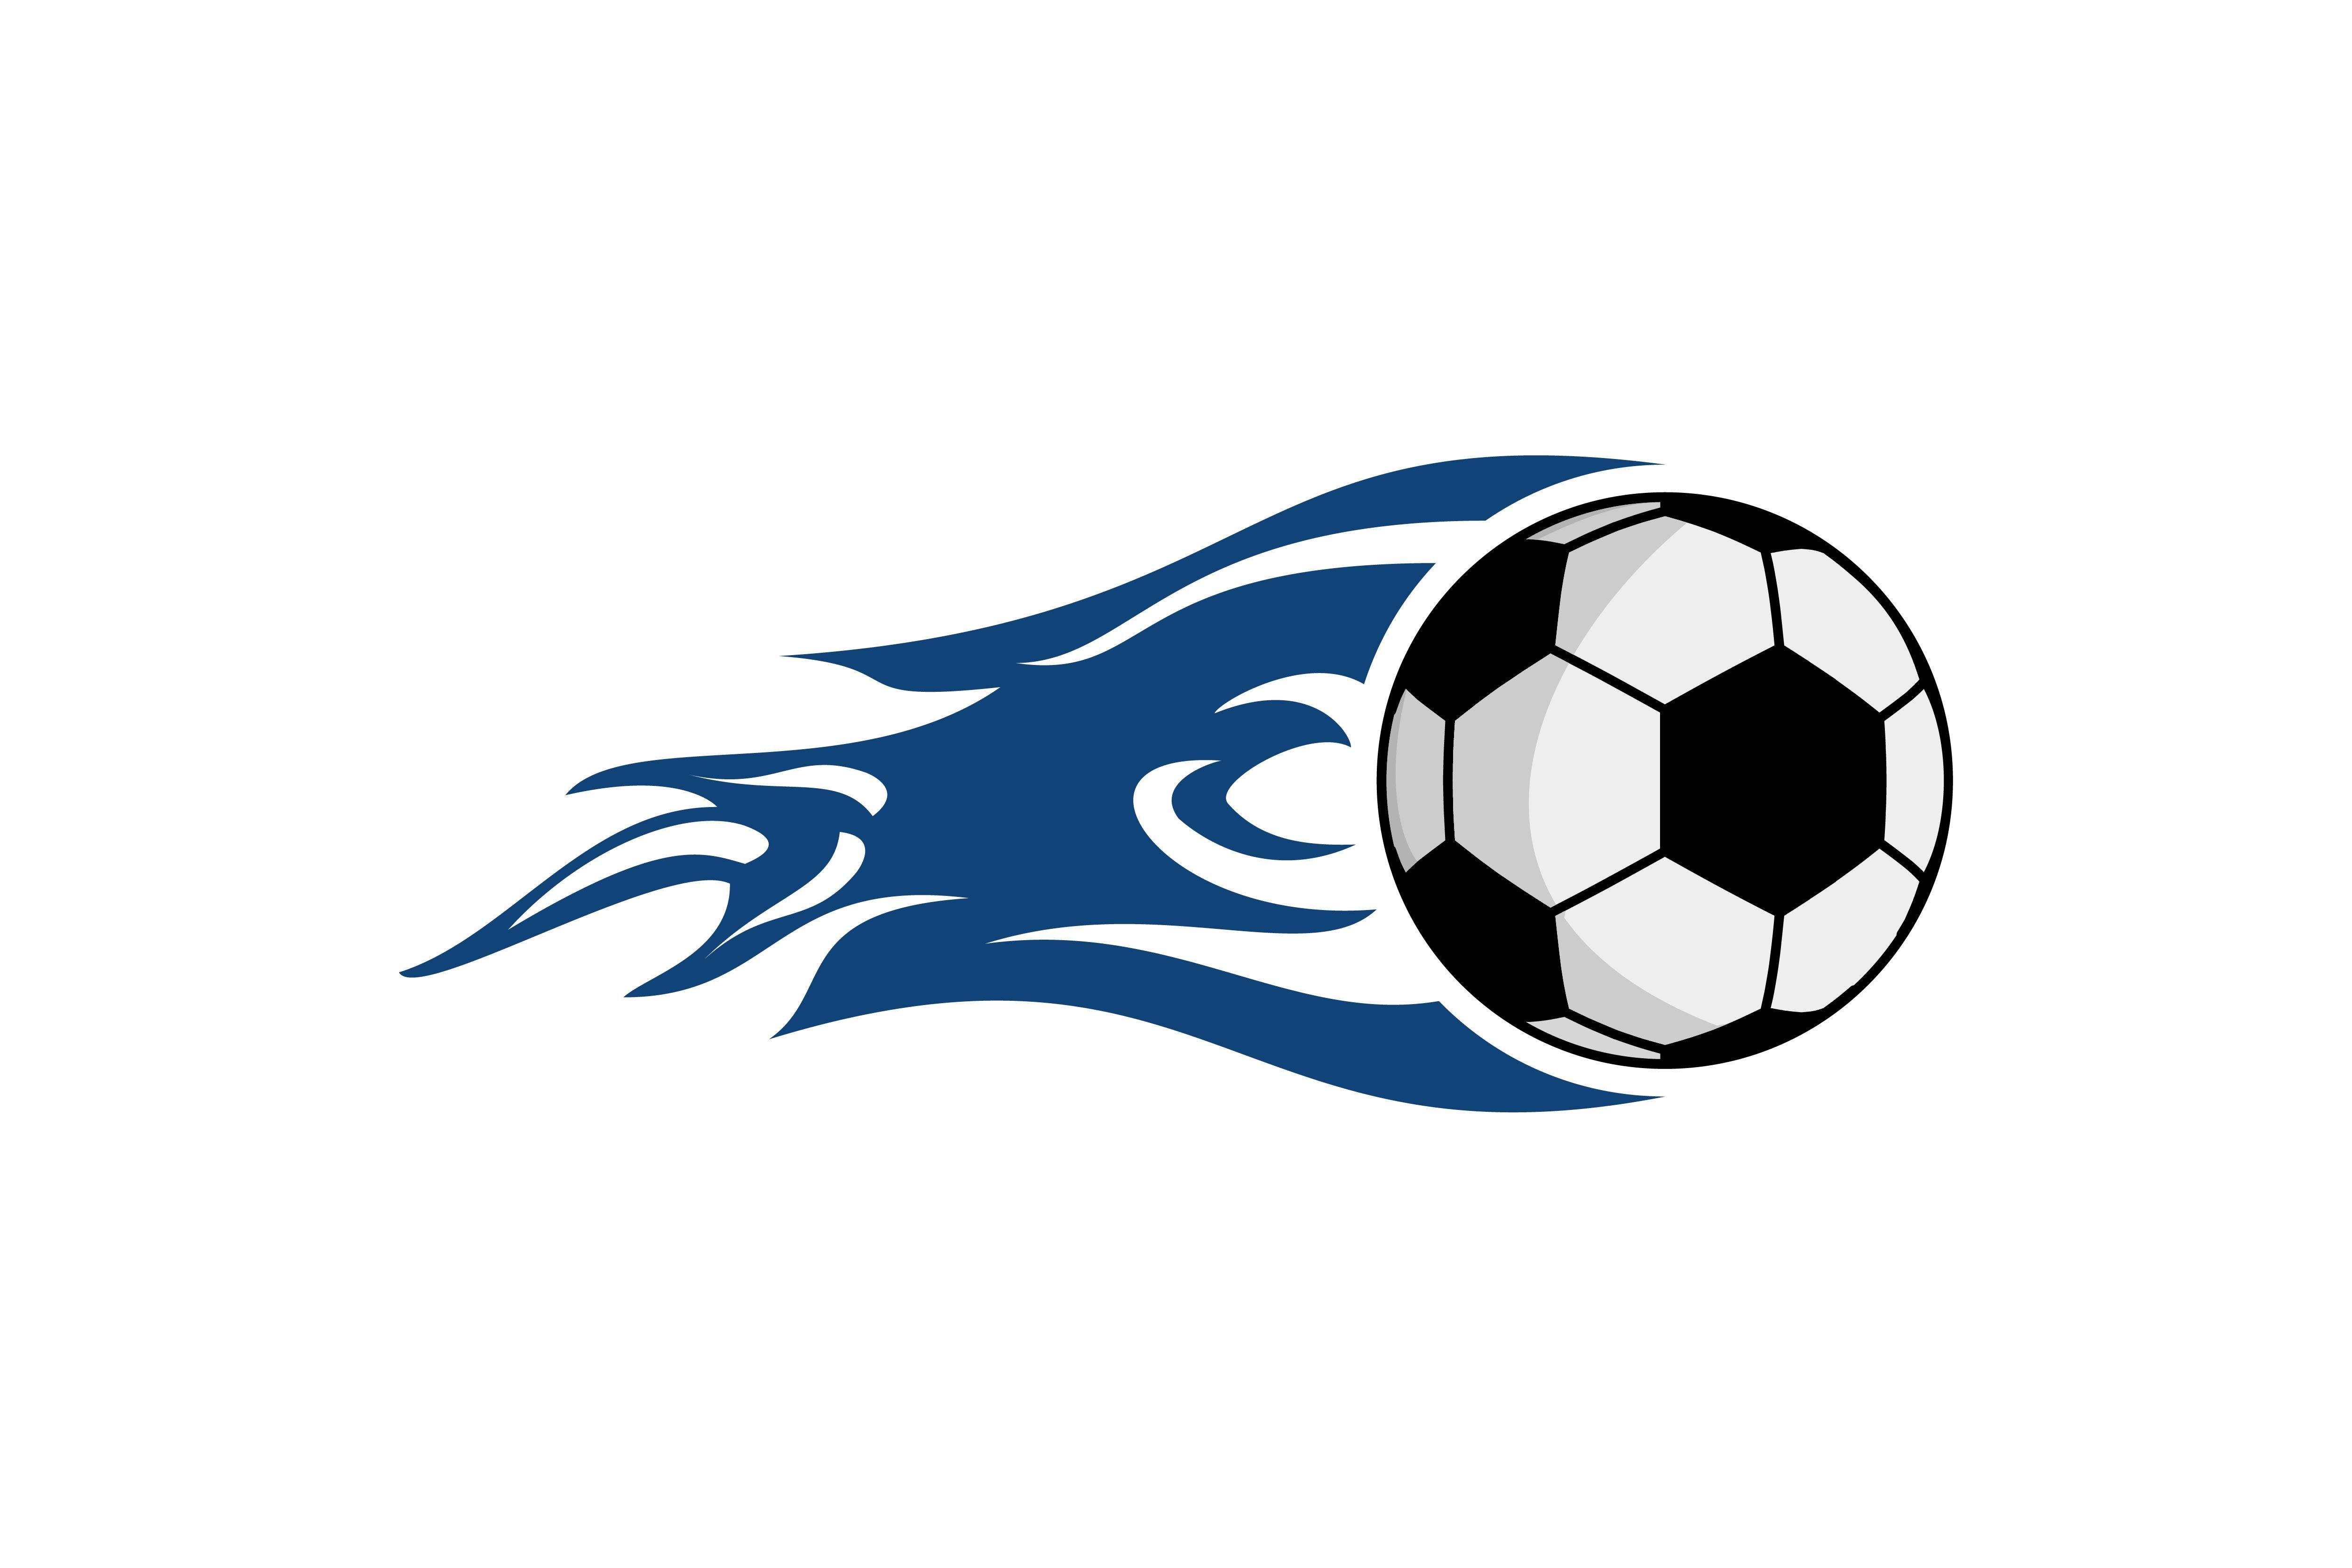 Blue and White Football Logo - Football logo Graphic